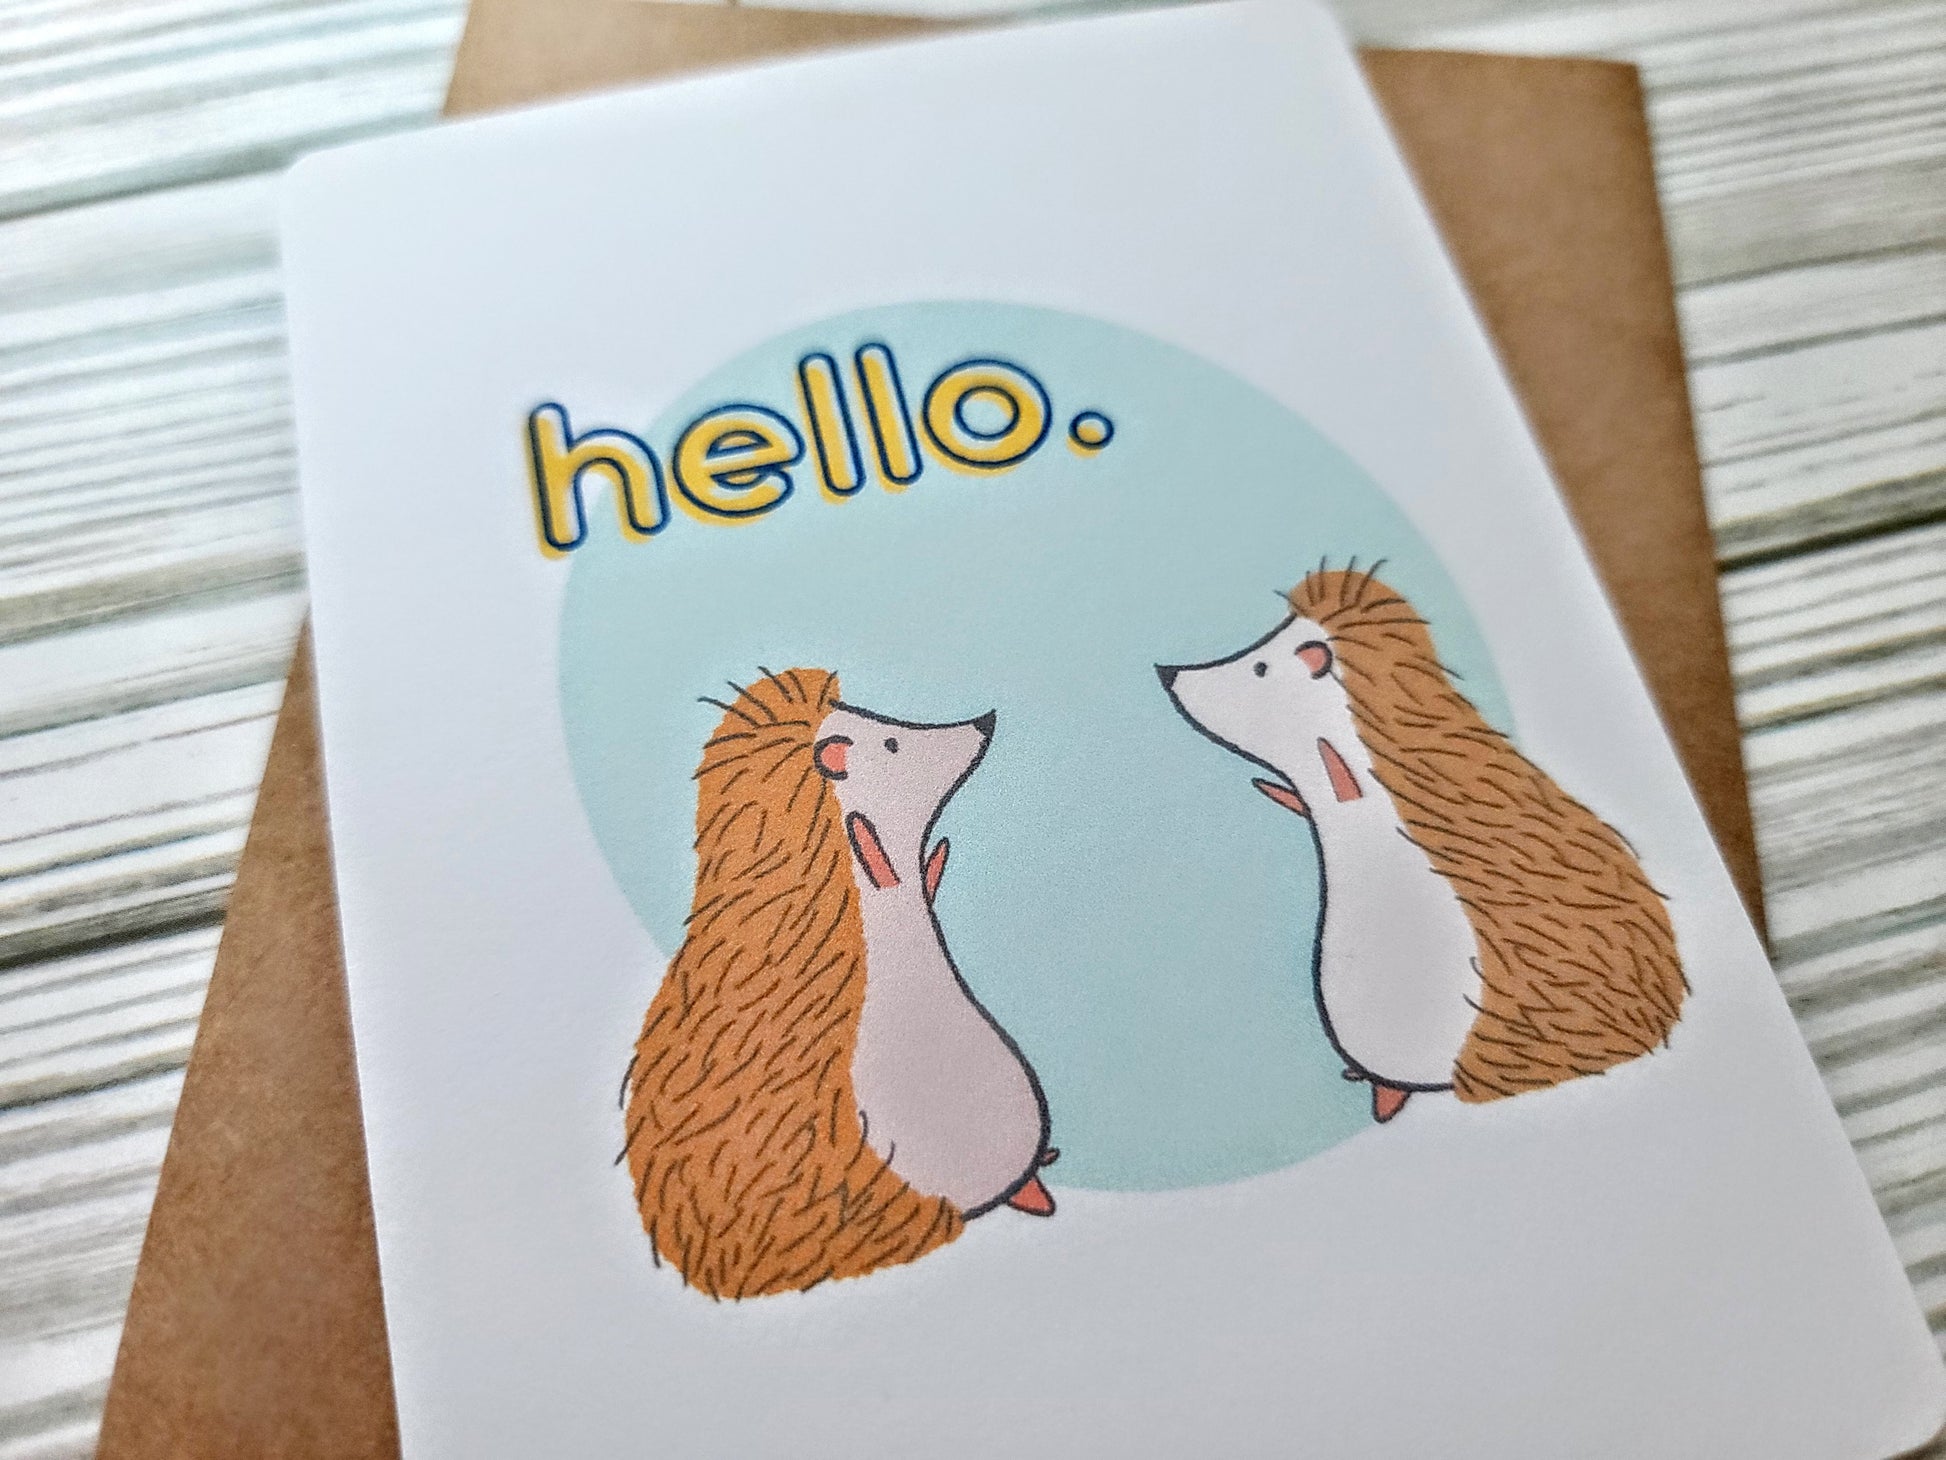 Hedgehog Hello Handmade Greeting Card - Recycled Paper and Kraft Envelope - Angled Overhead Shot